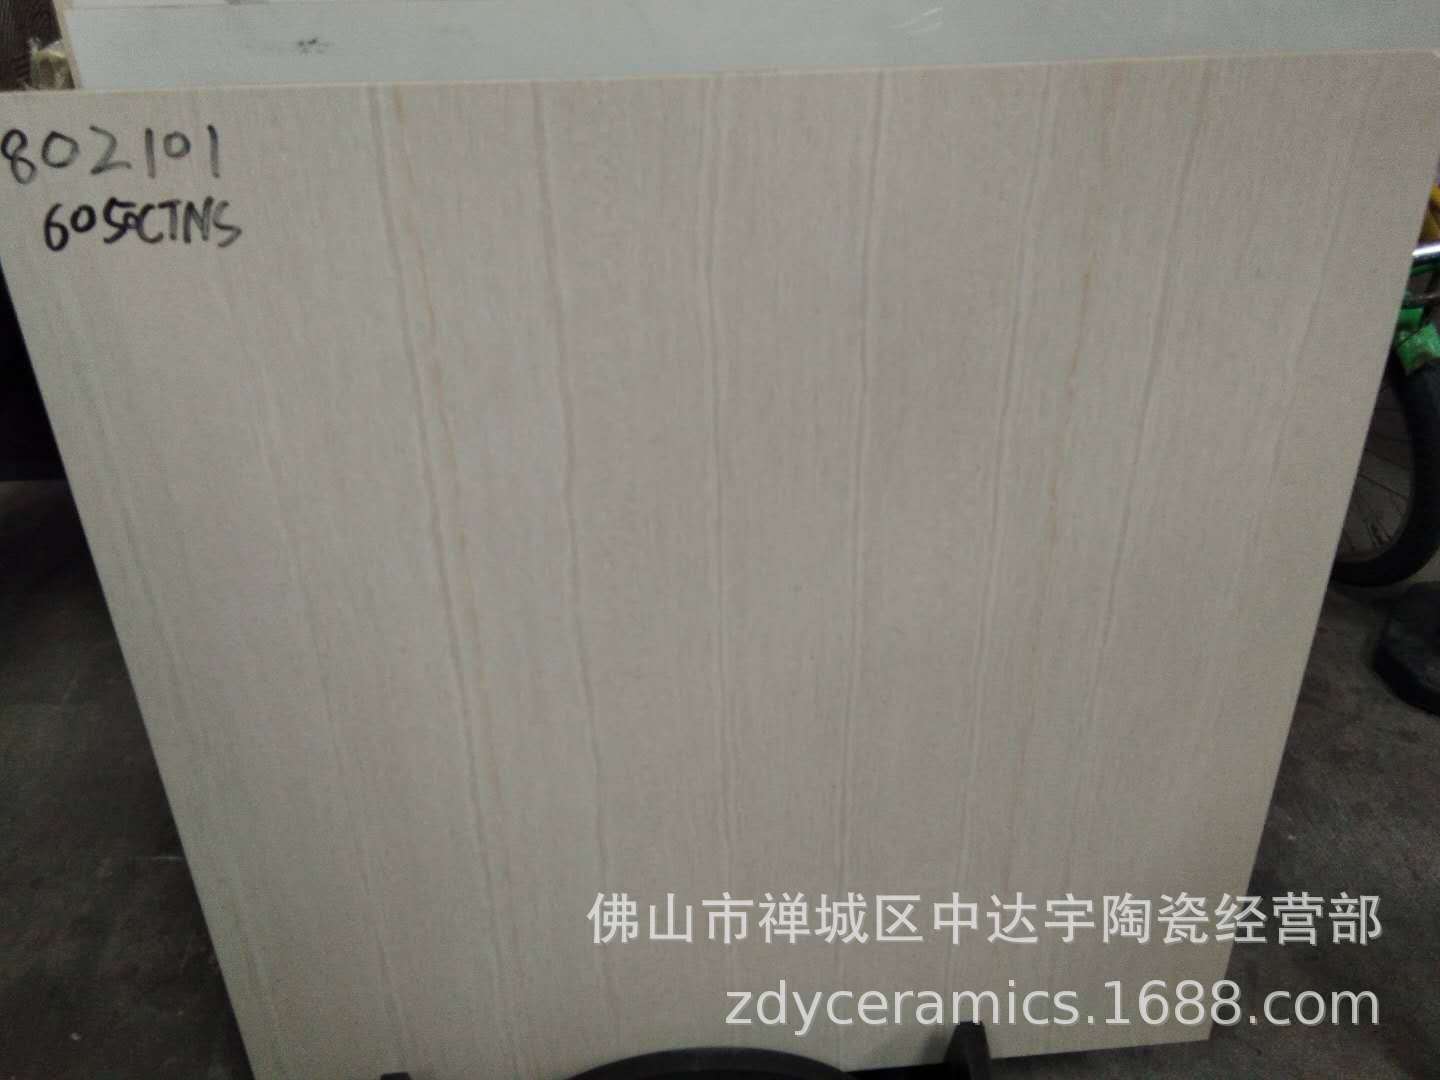 OM 80x80cm颗粒线石系列抛光瓷砖防滑防潮客厅厨房浴室地面砖墙砖示例图3